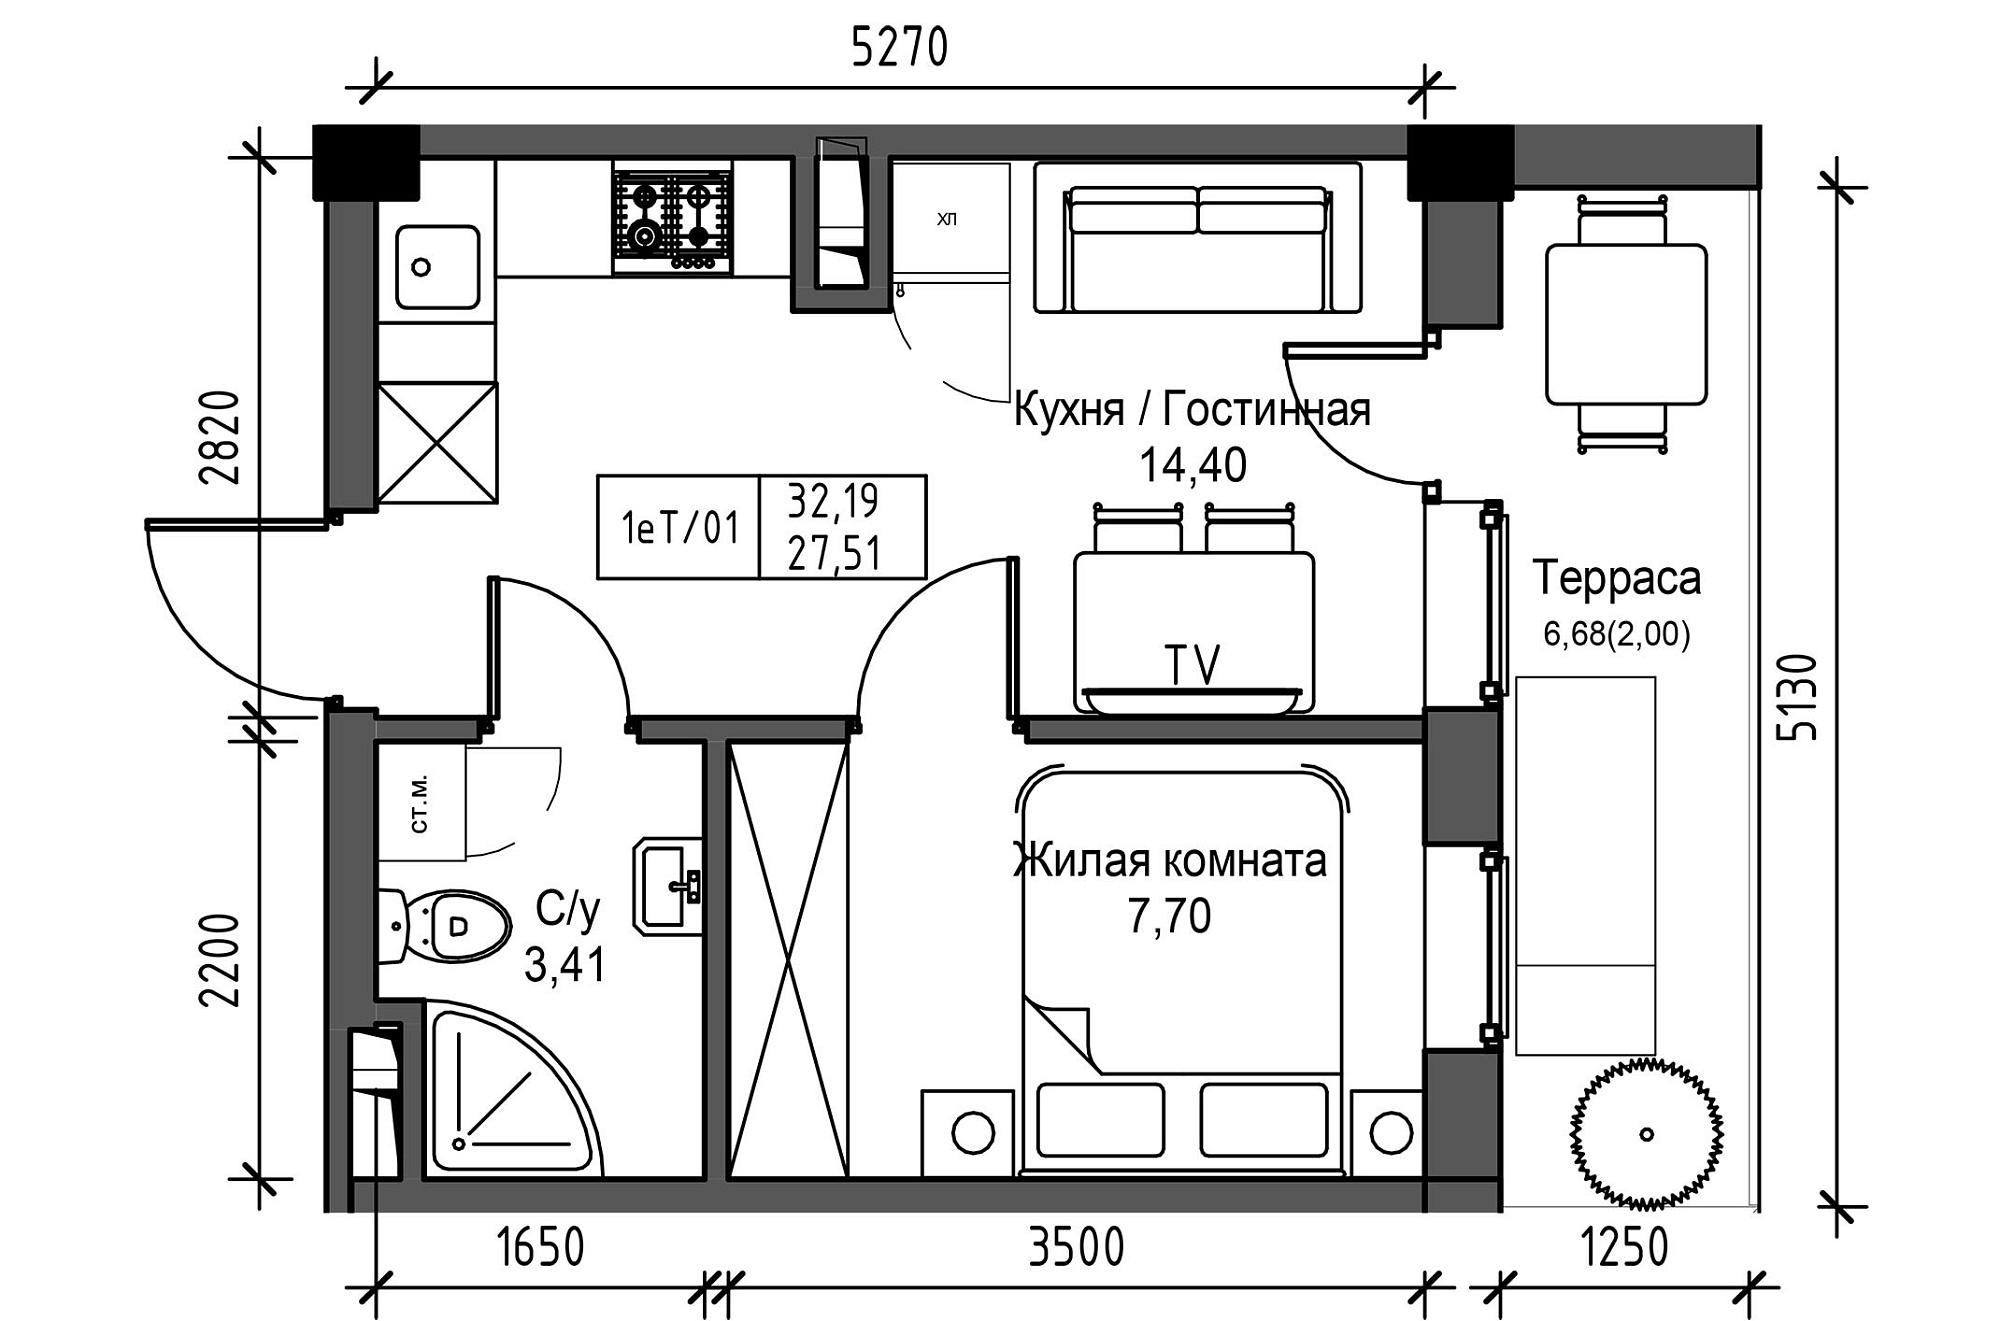 Планування 1-к квартира площею 27.51м2, UM-003-05/0035.